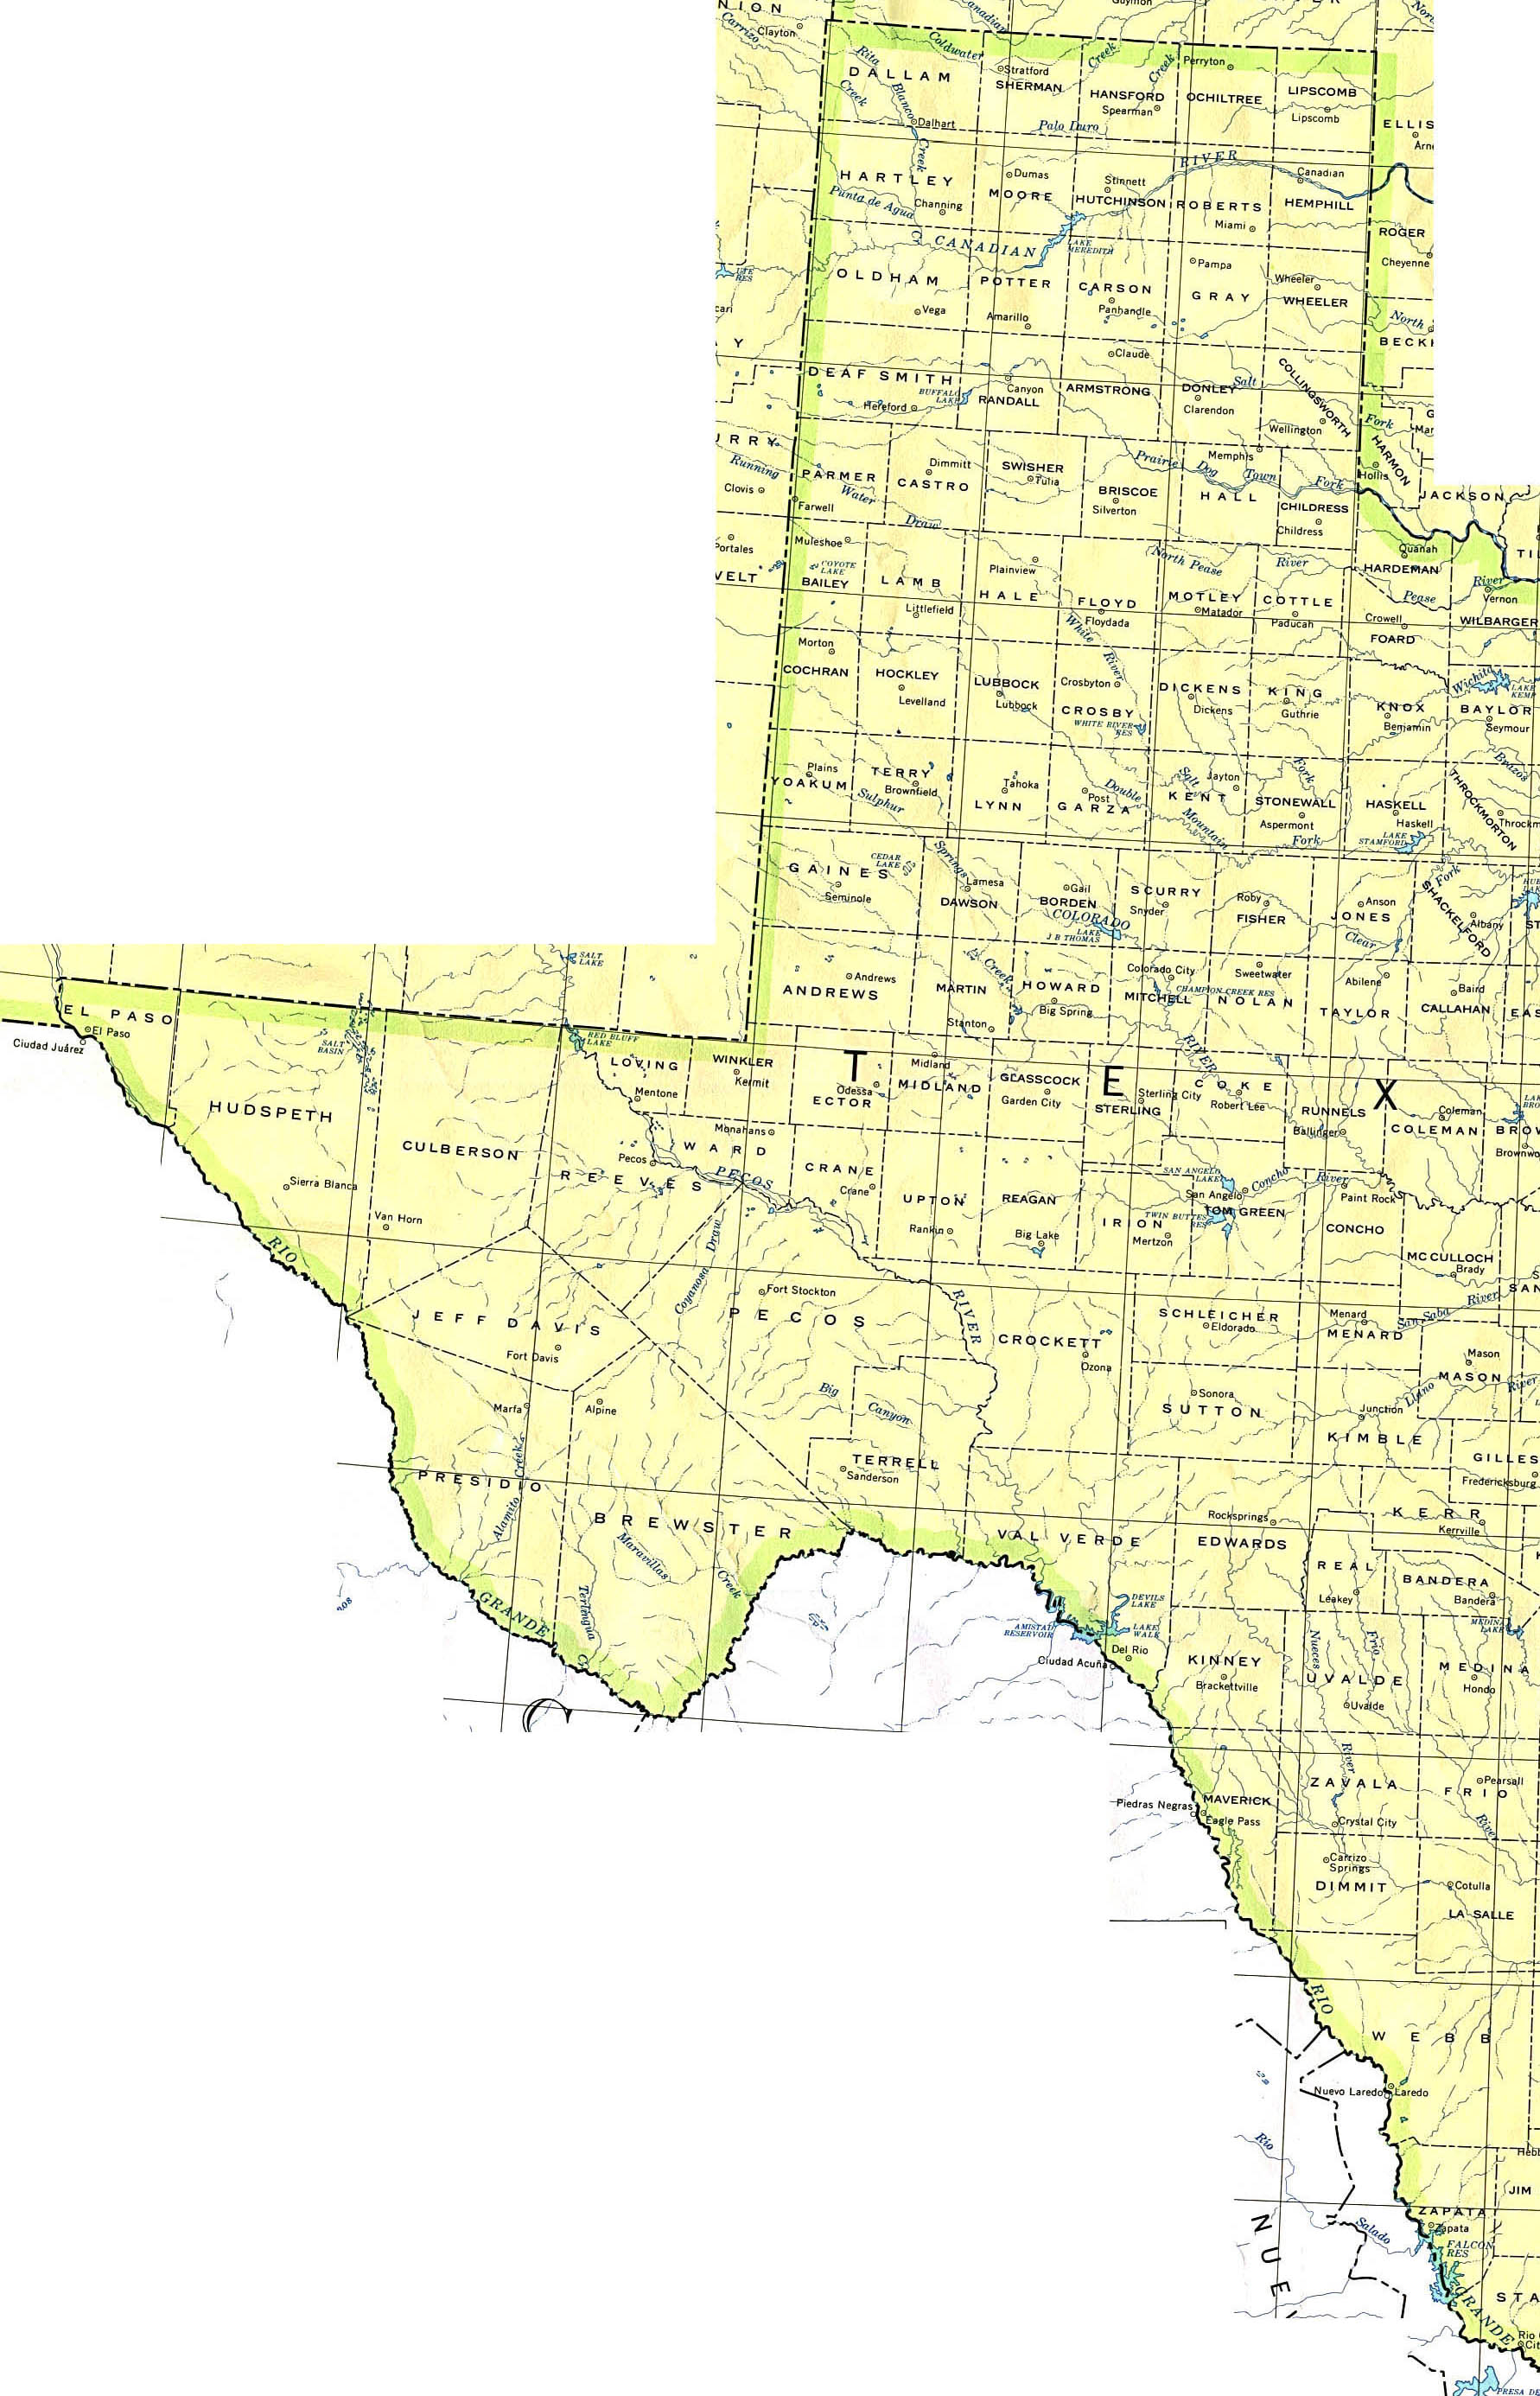 1up Travel Maps Of Texas Texas Western 1 2 500 000 U S G S